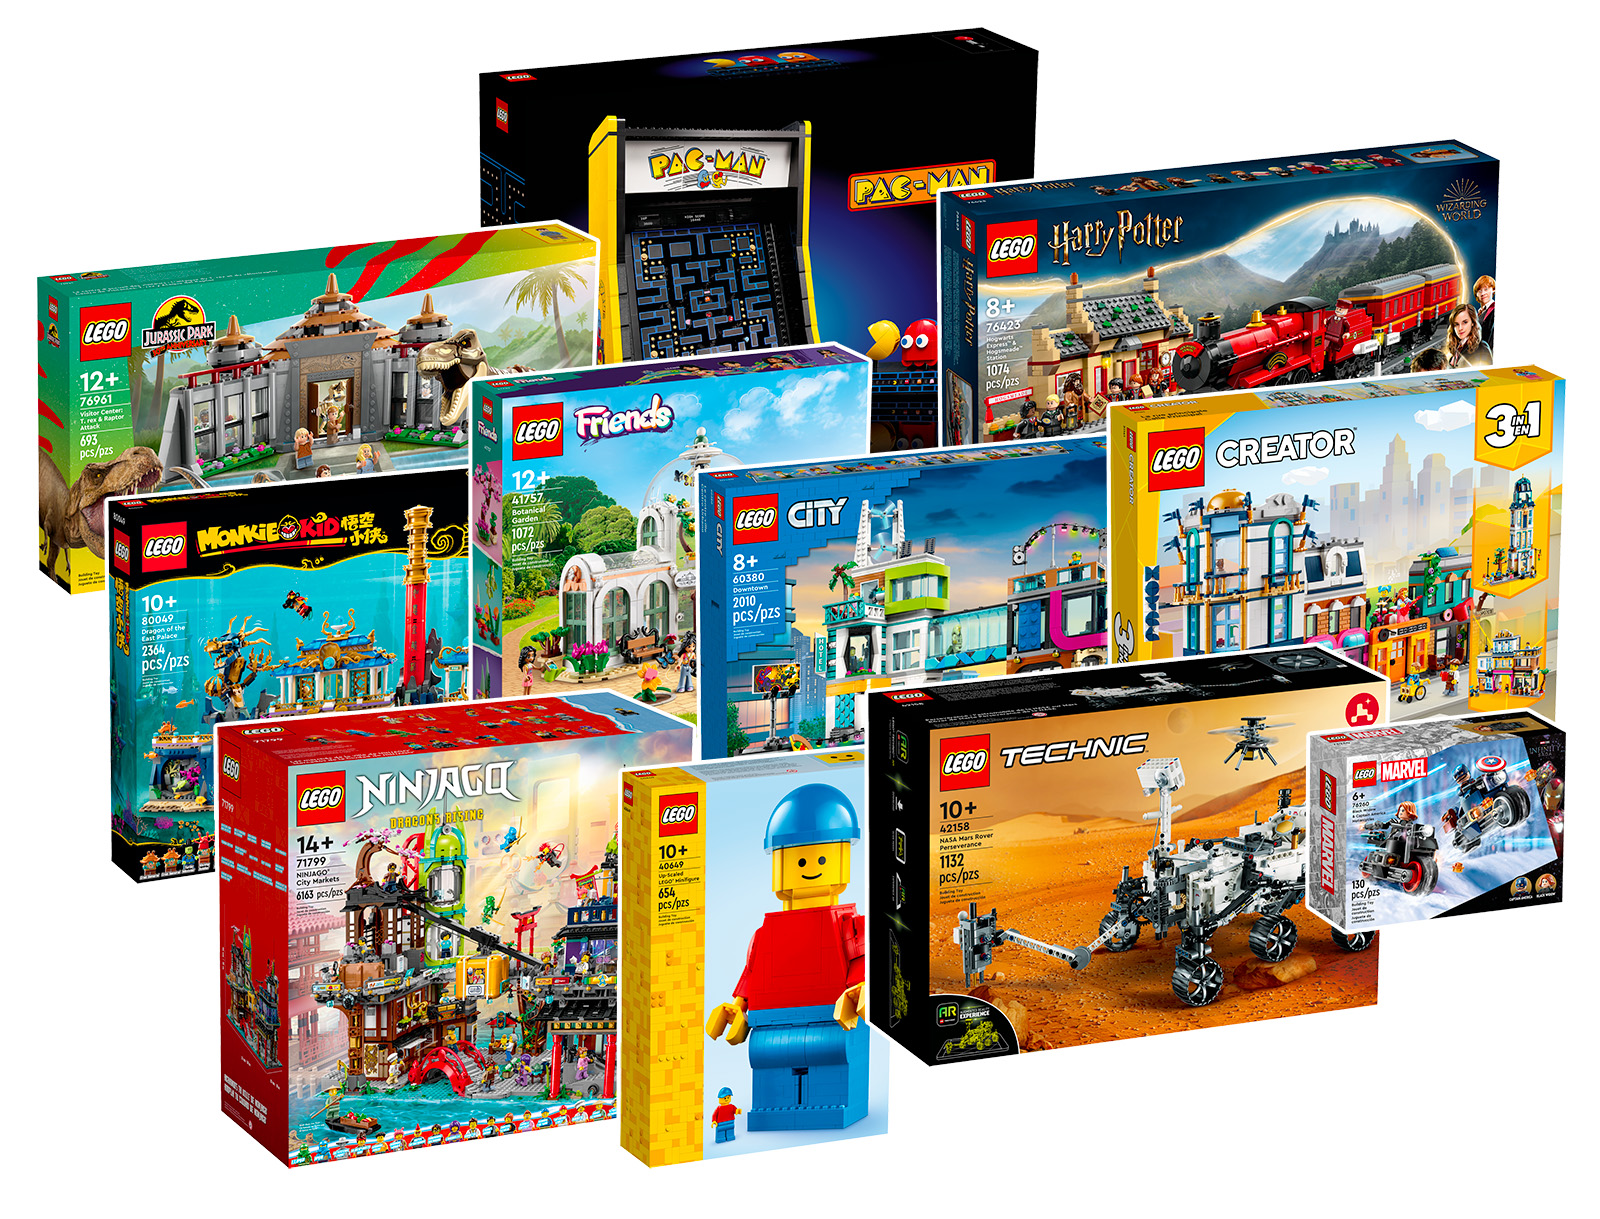 LEGO NINJAGO DRAGON RISING : Les sets de juin 2023 sont dévoilés